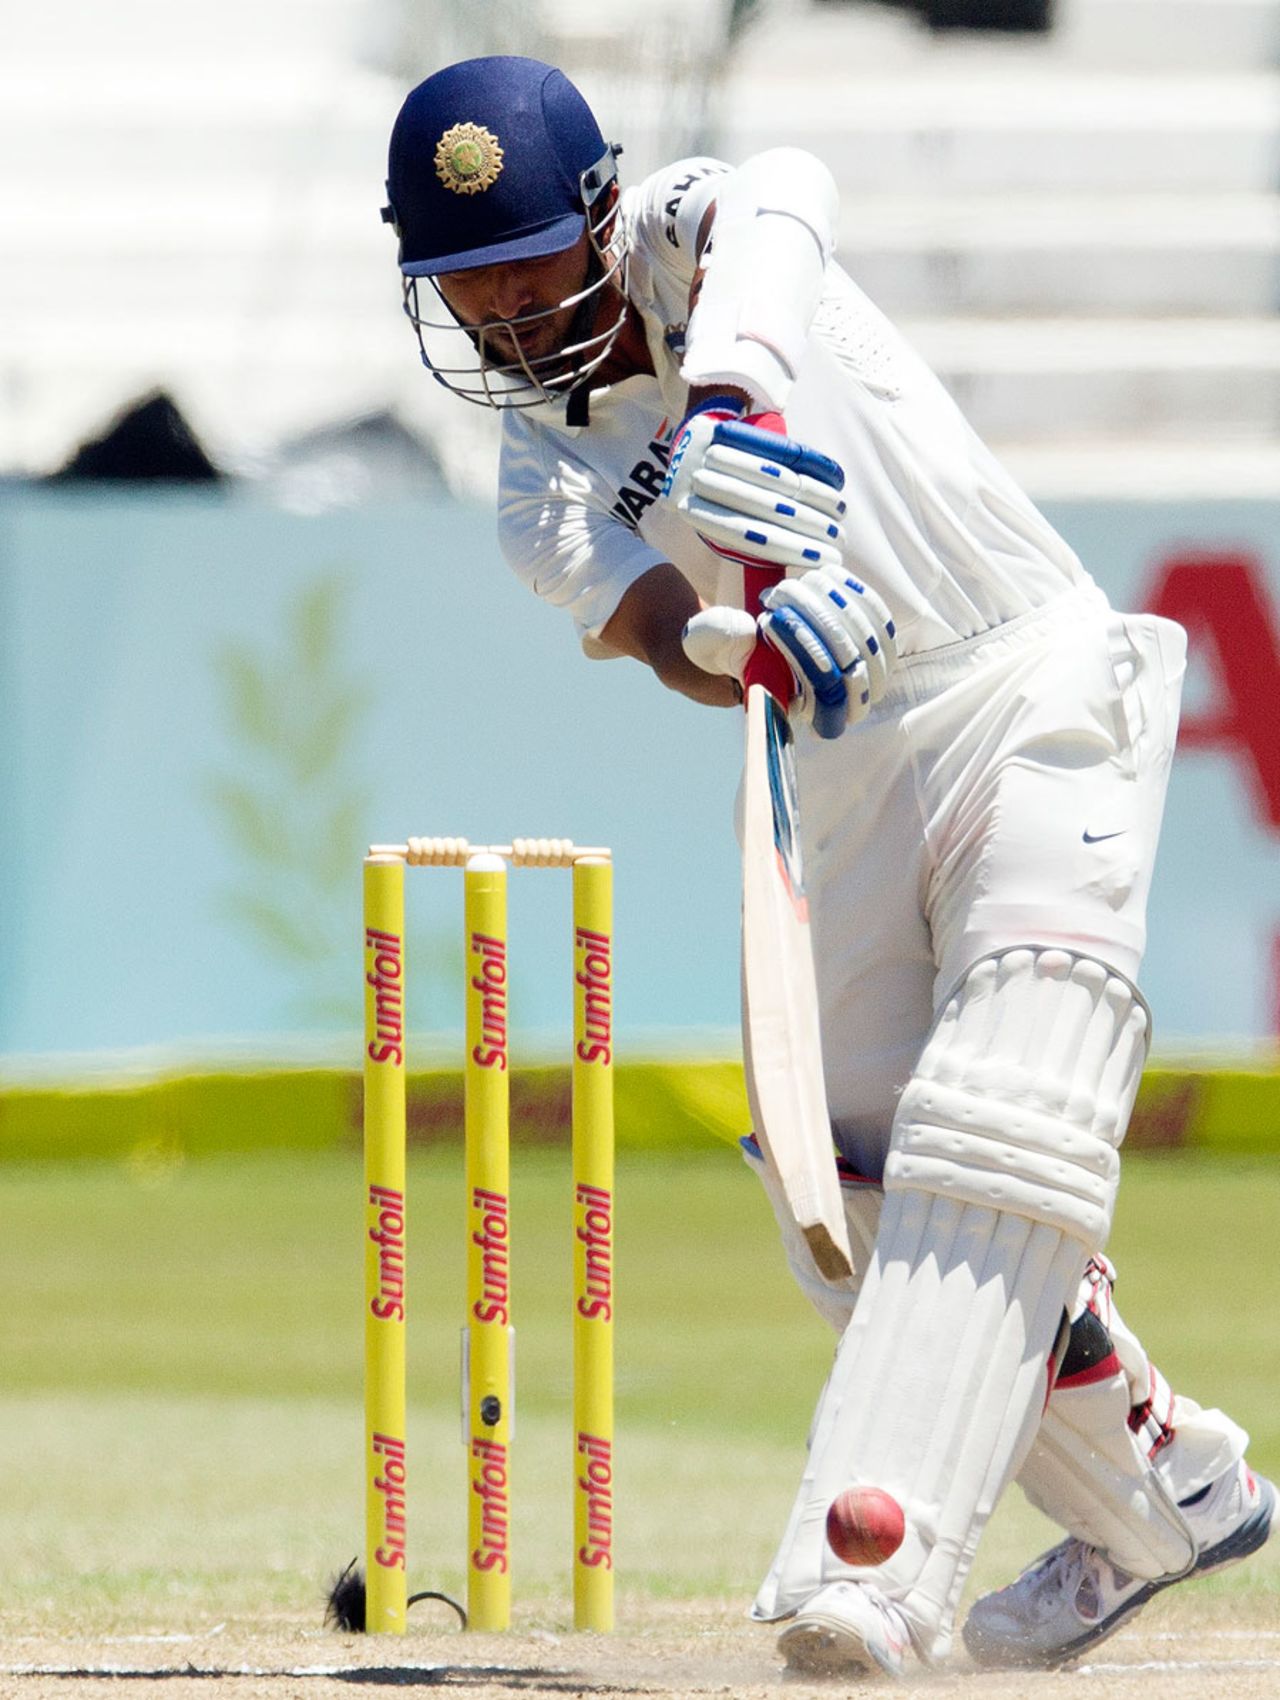 Ajinkya Rahane turns one to the leg side, South Africa v India, 2nd Test, Durban, 4th day, December 29, 2013